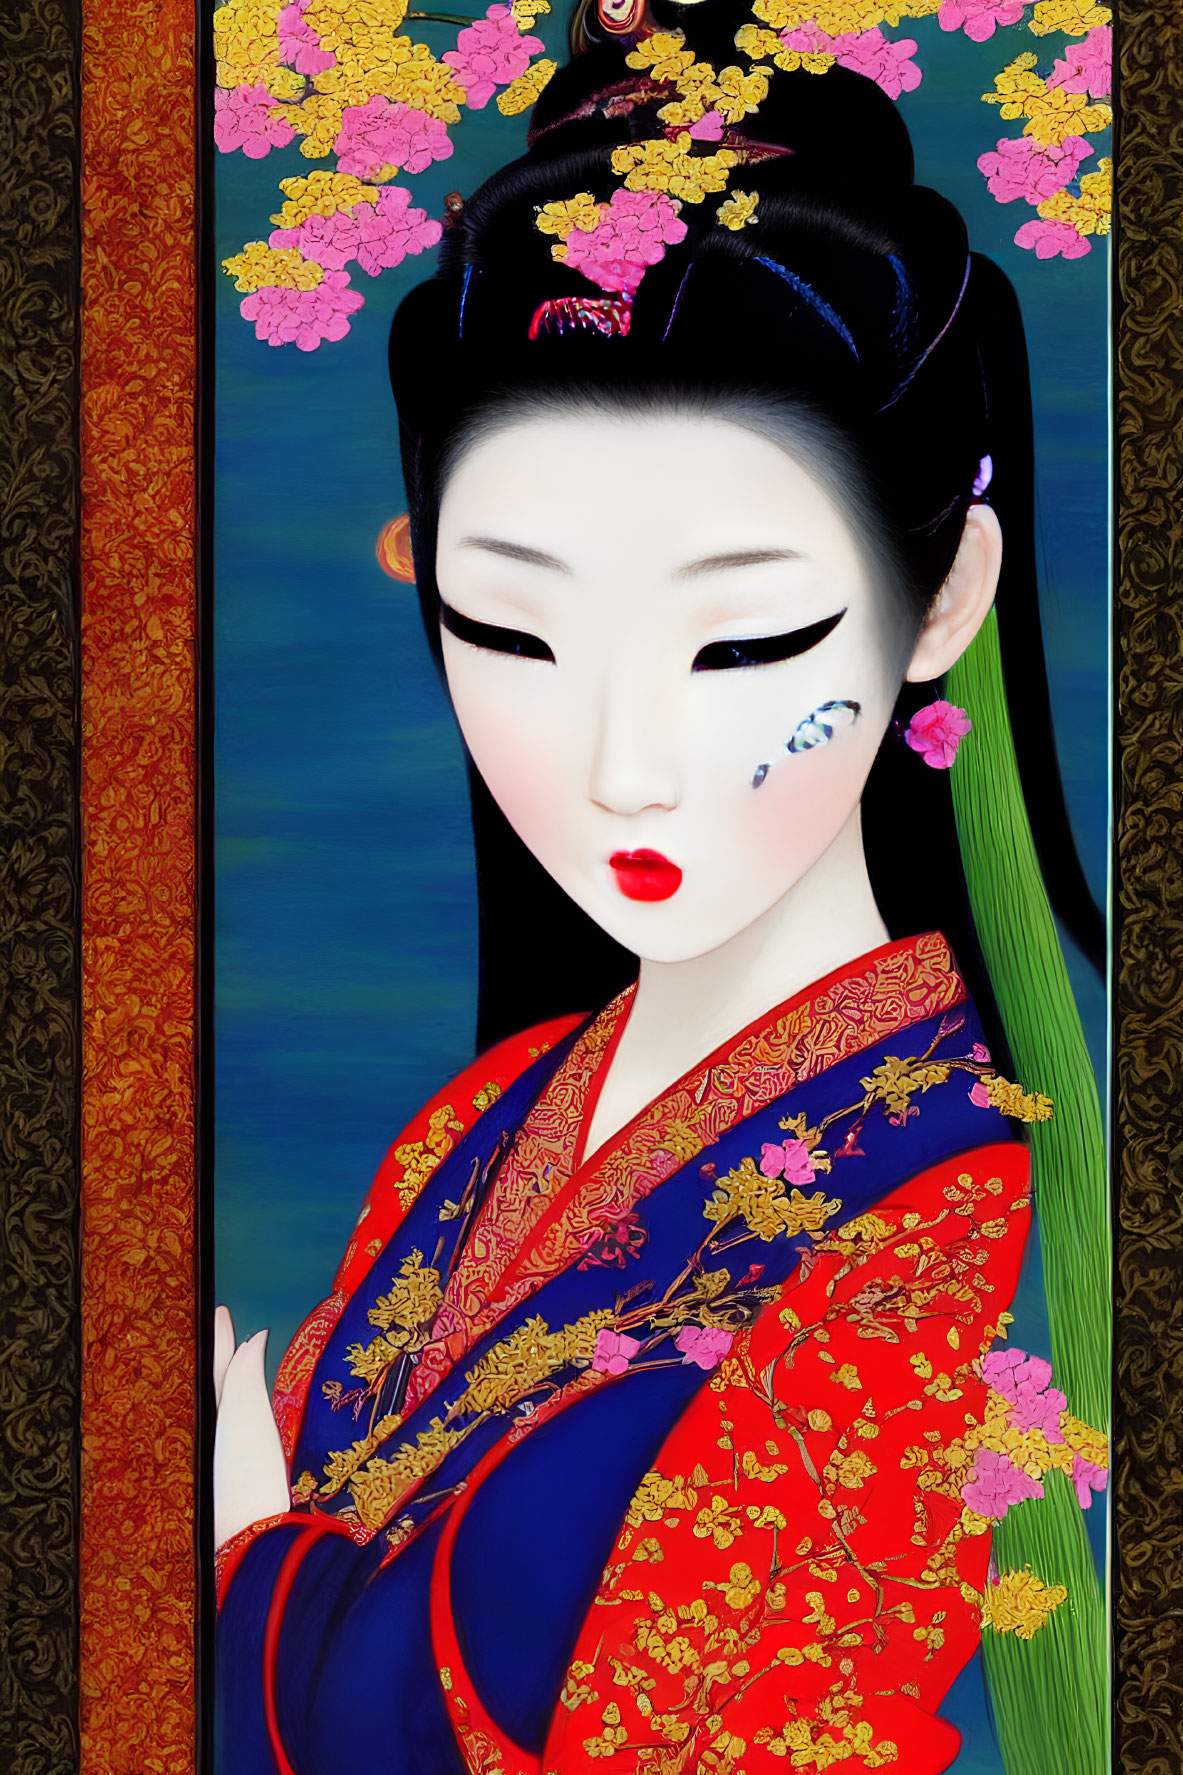 Colorful Geisha Artwork with Elaborate Kimonos and Hairstyle